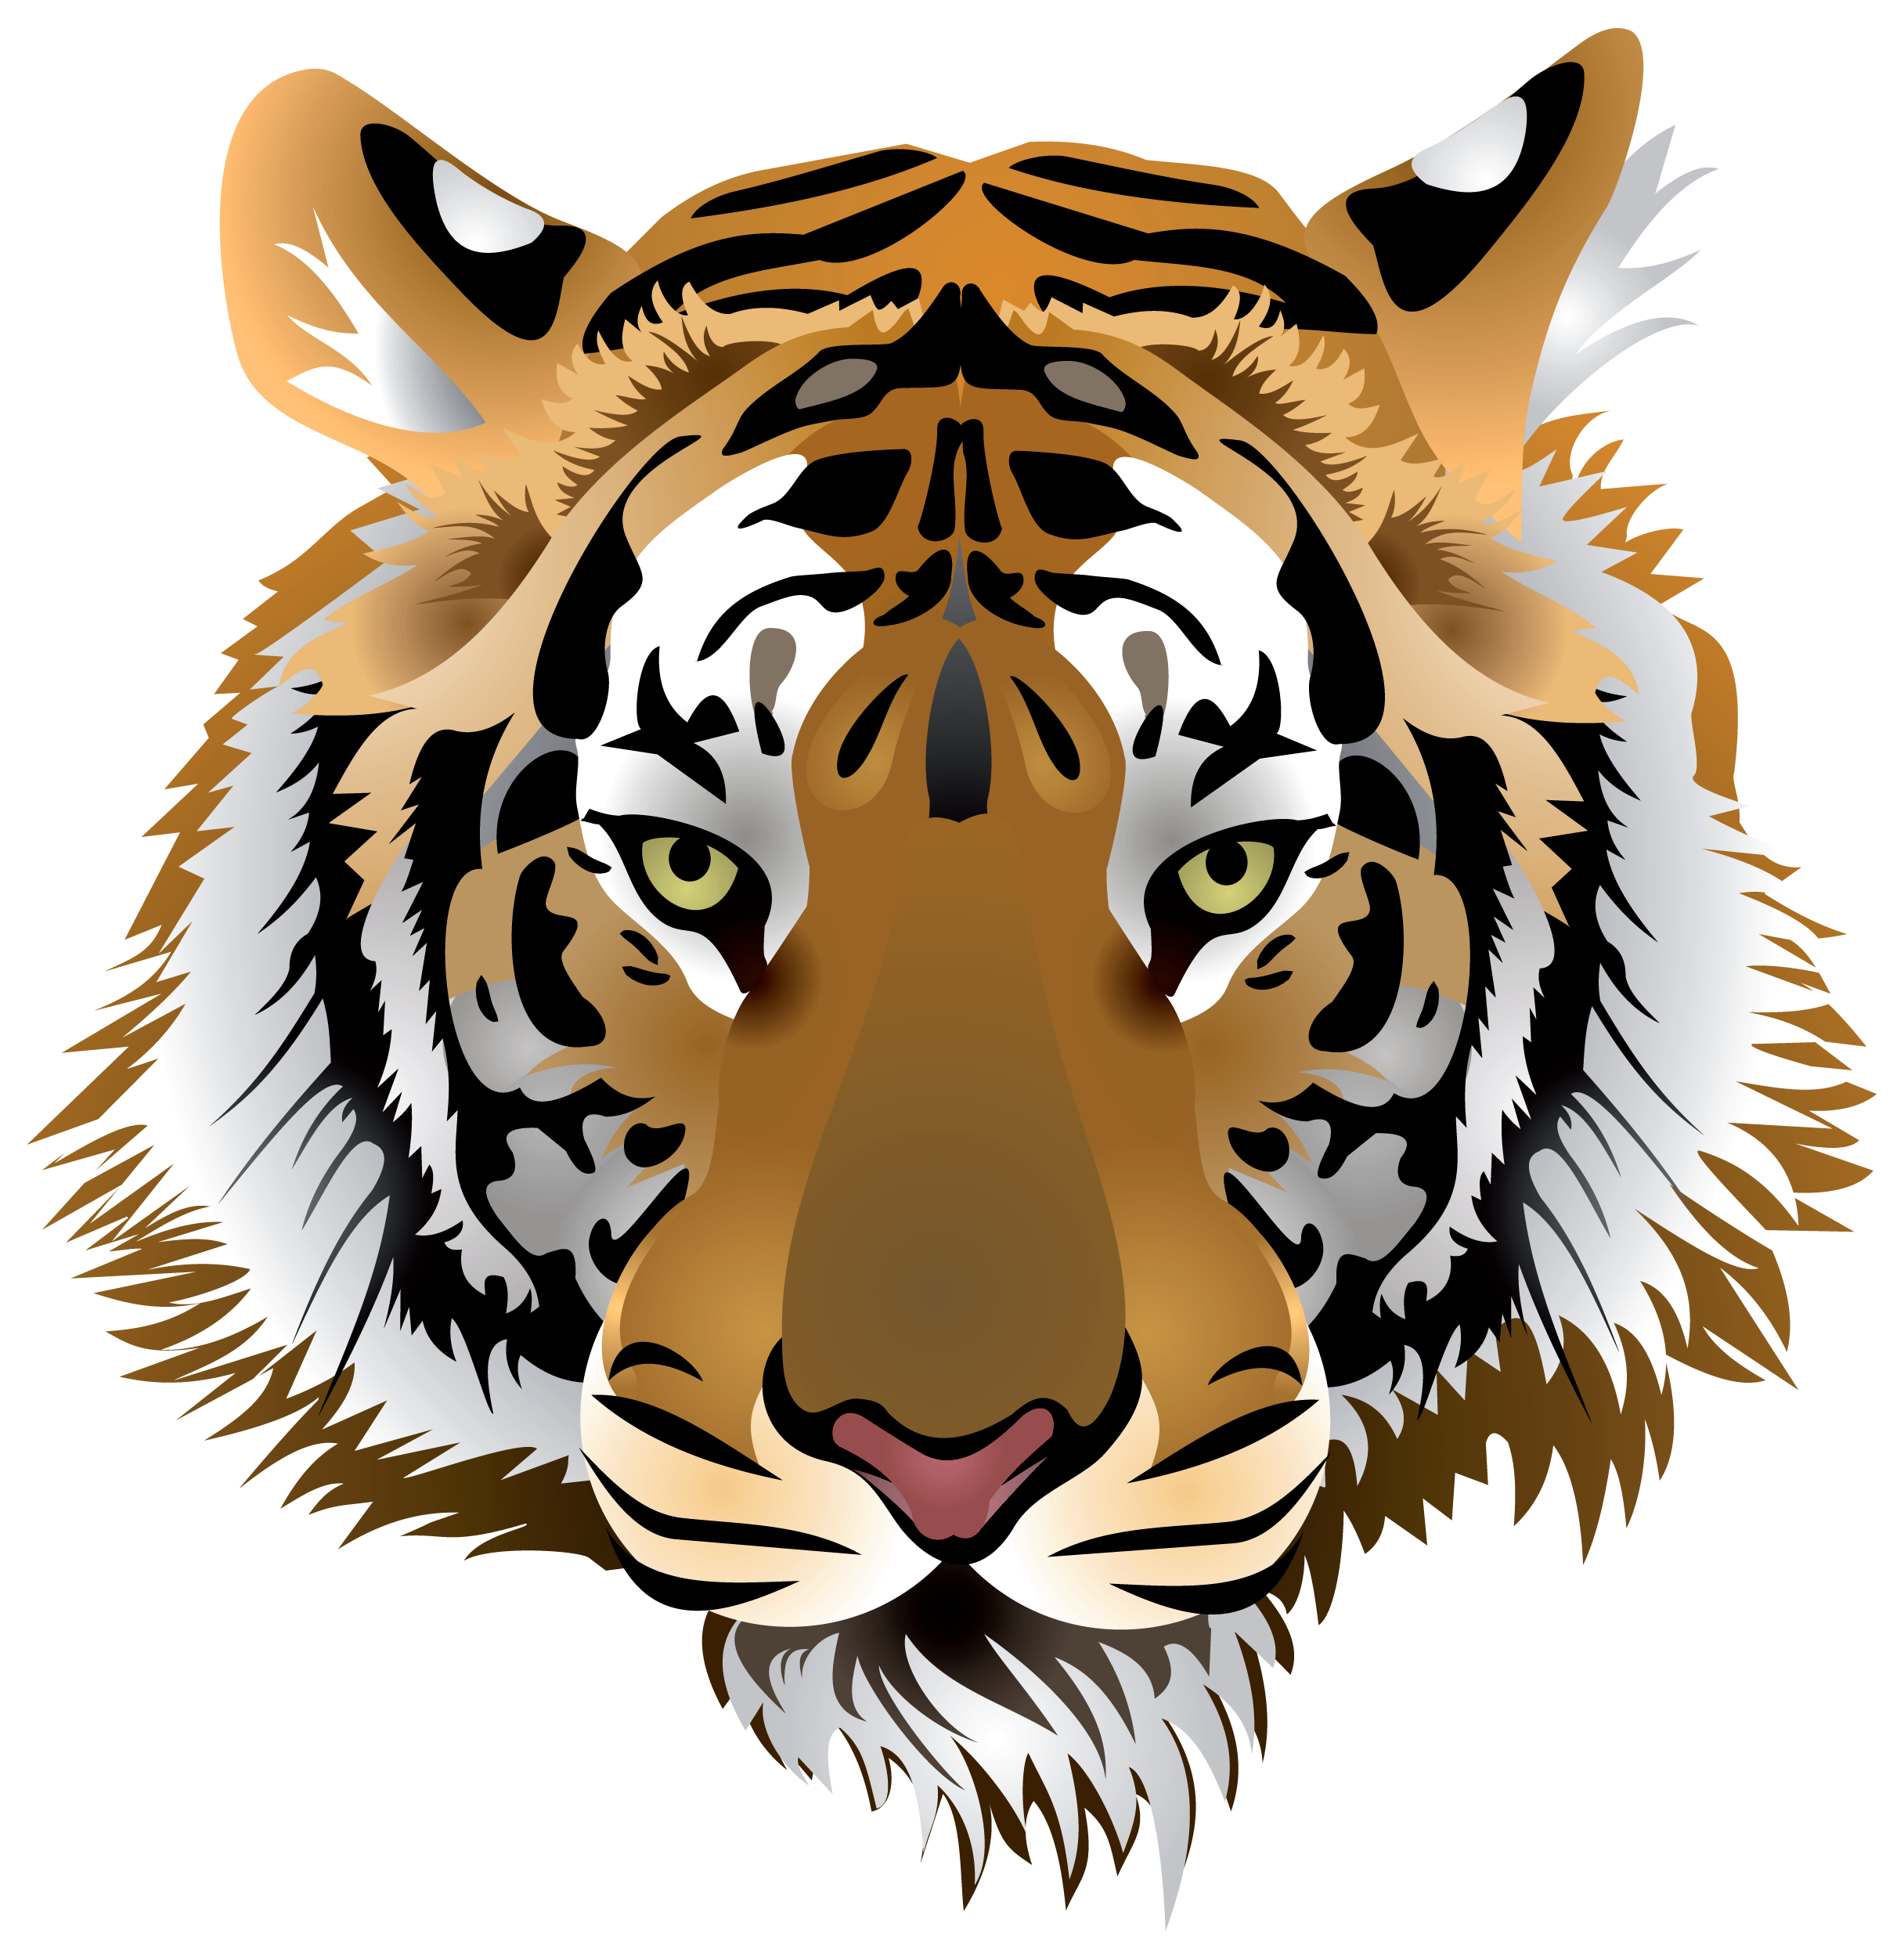 tiger face clipart